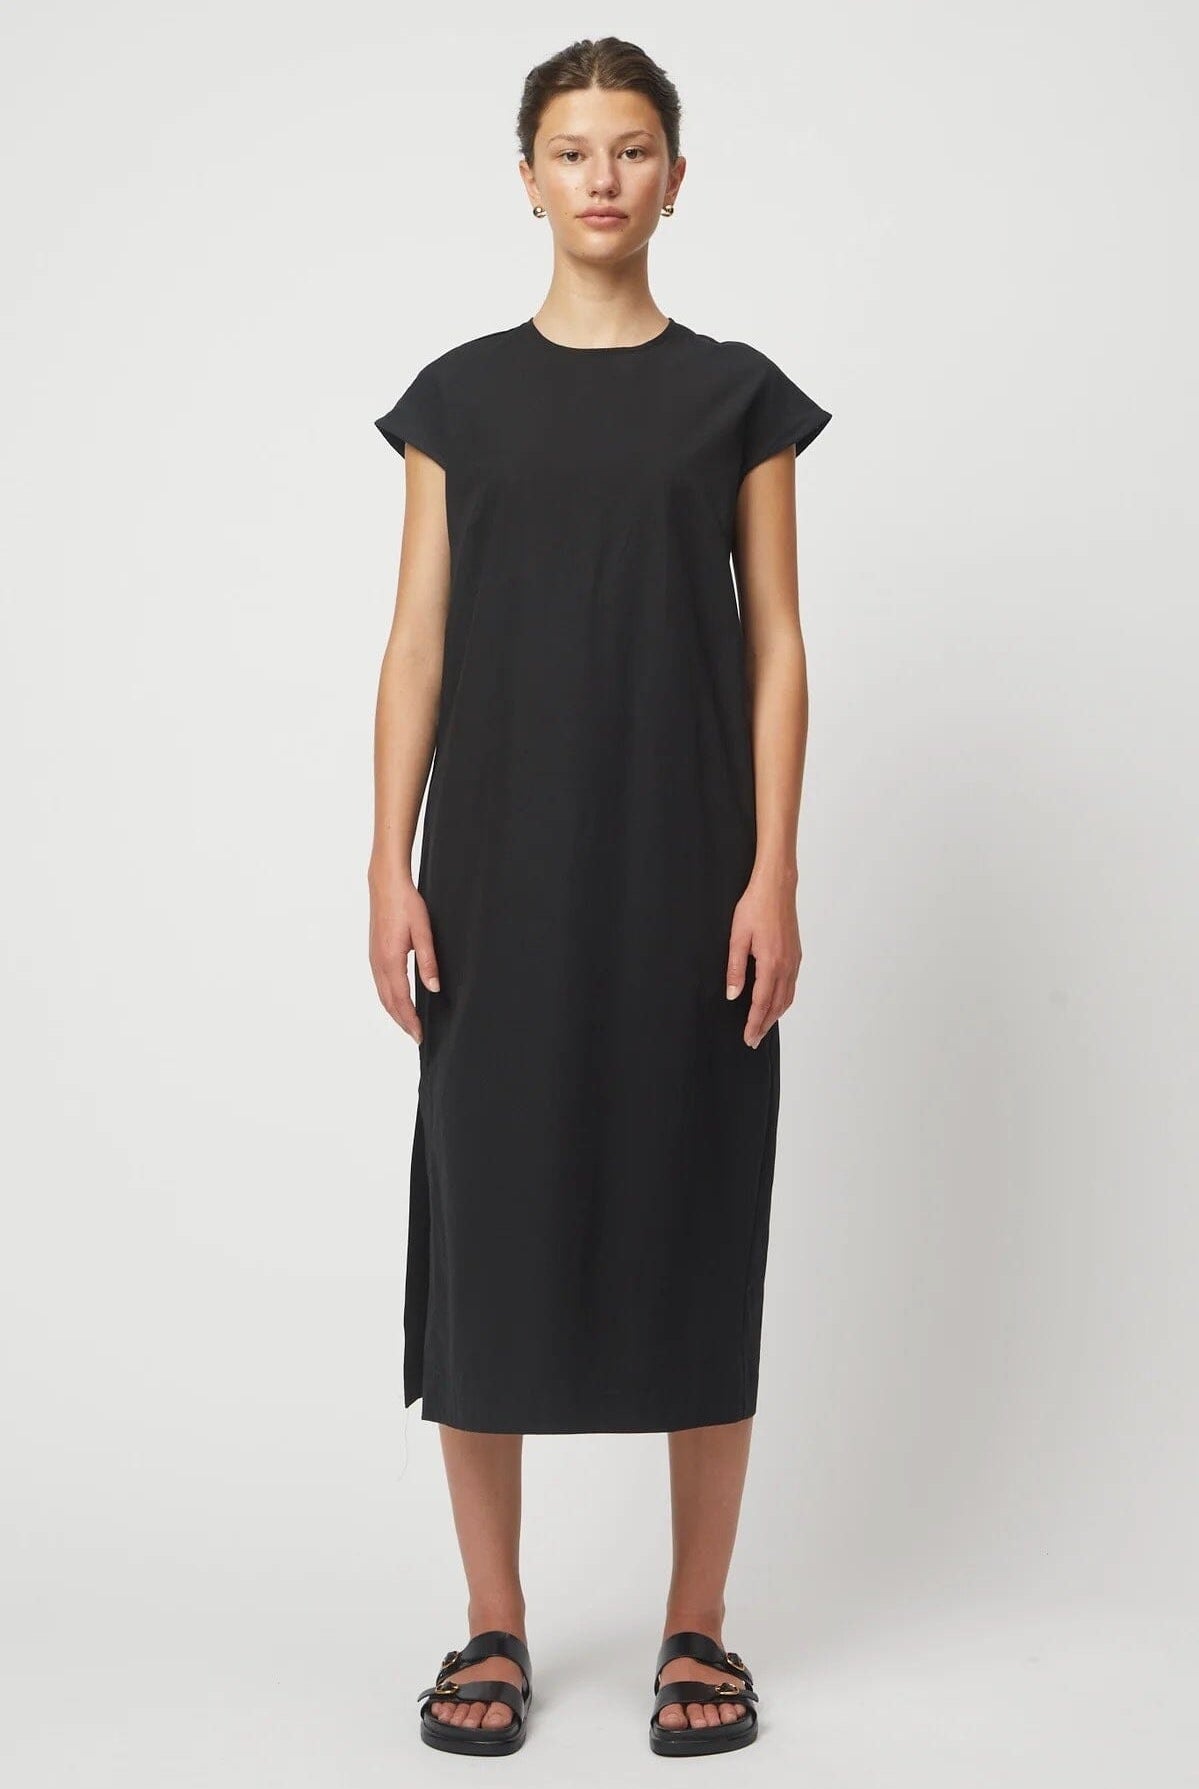 Atelier Delphine | Dumas Dress In Black - SHOP YUCCA Dresses ATELIER DELPHINE - YUCCA 